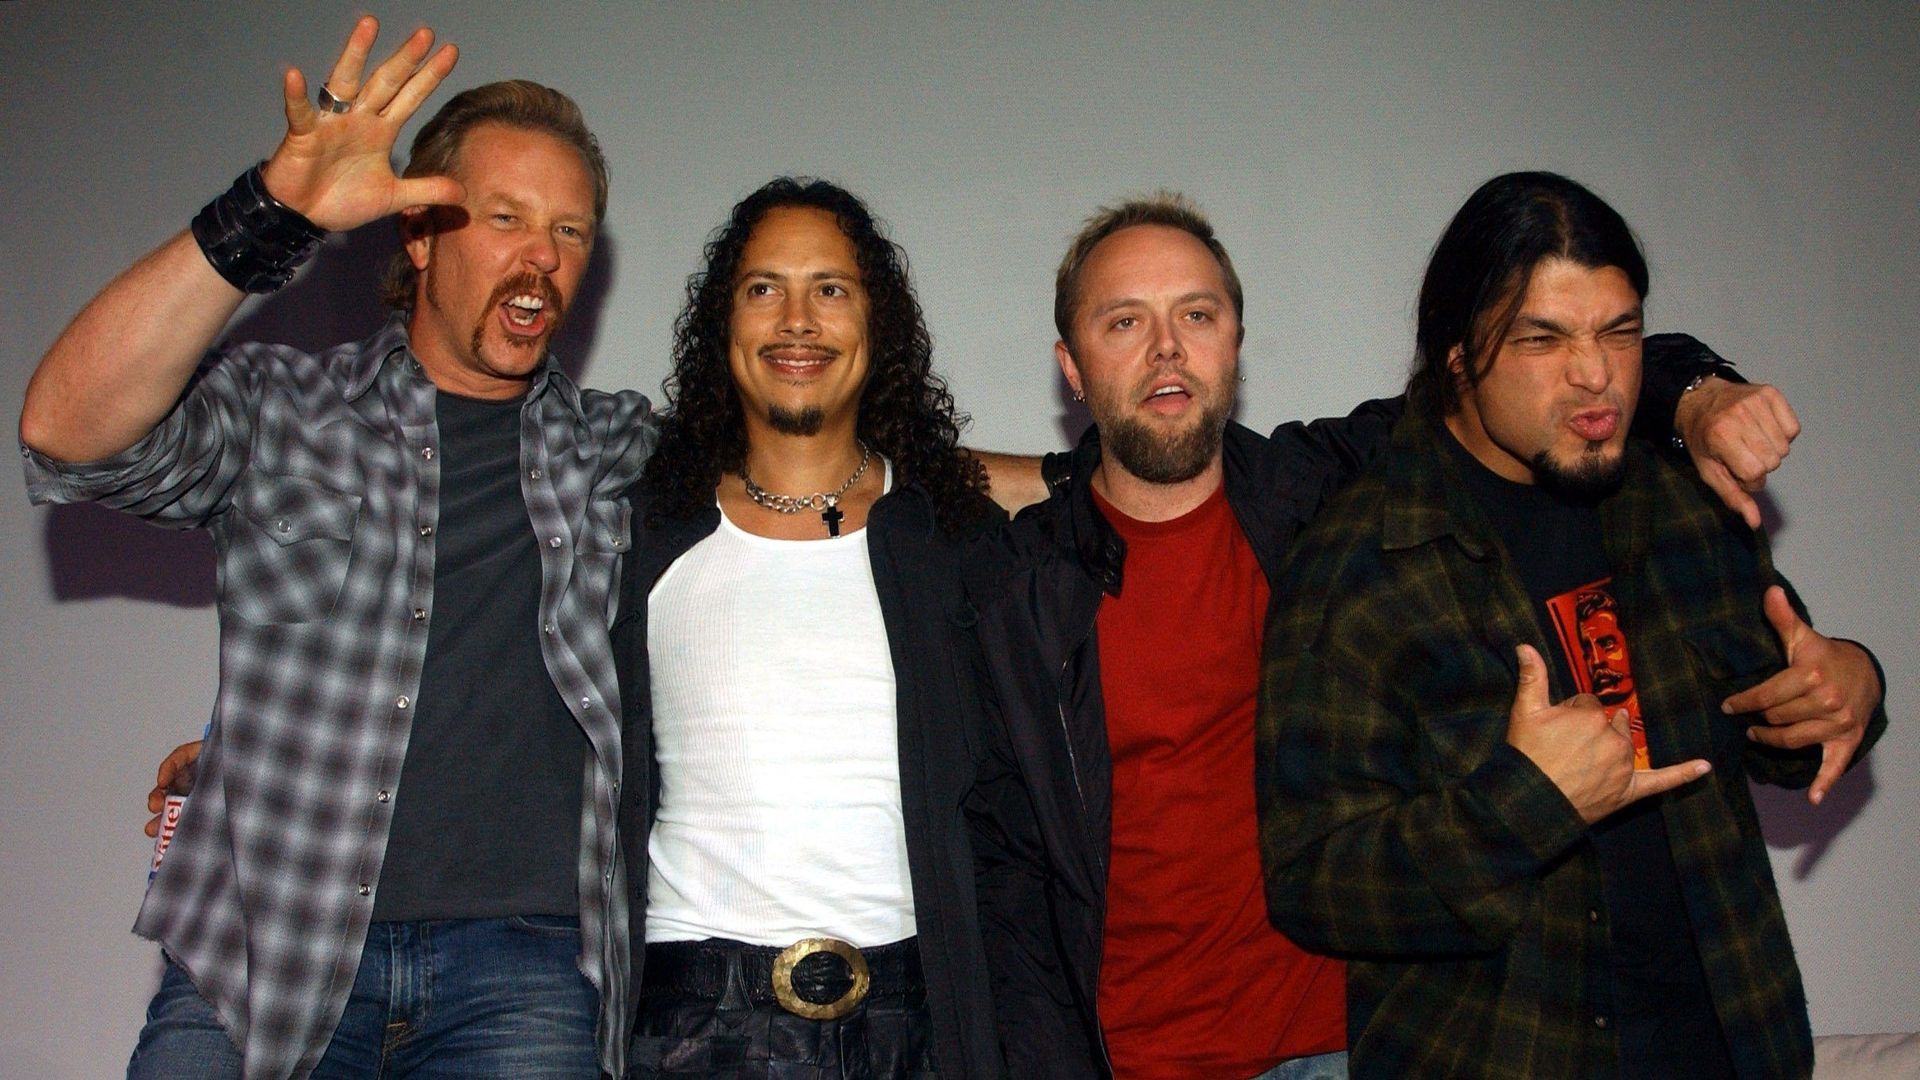 Members of the US heavy metal band Metallica, from L-R James Hetfield, Robert Trujillo, Lars Ulrich and Kirk Hammett pose for photos